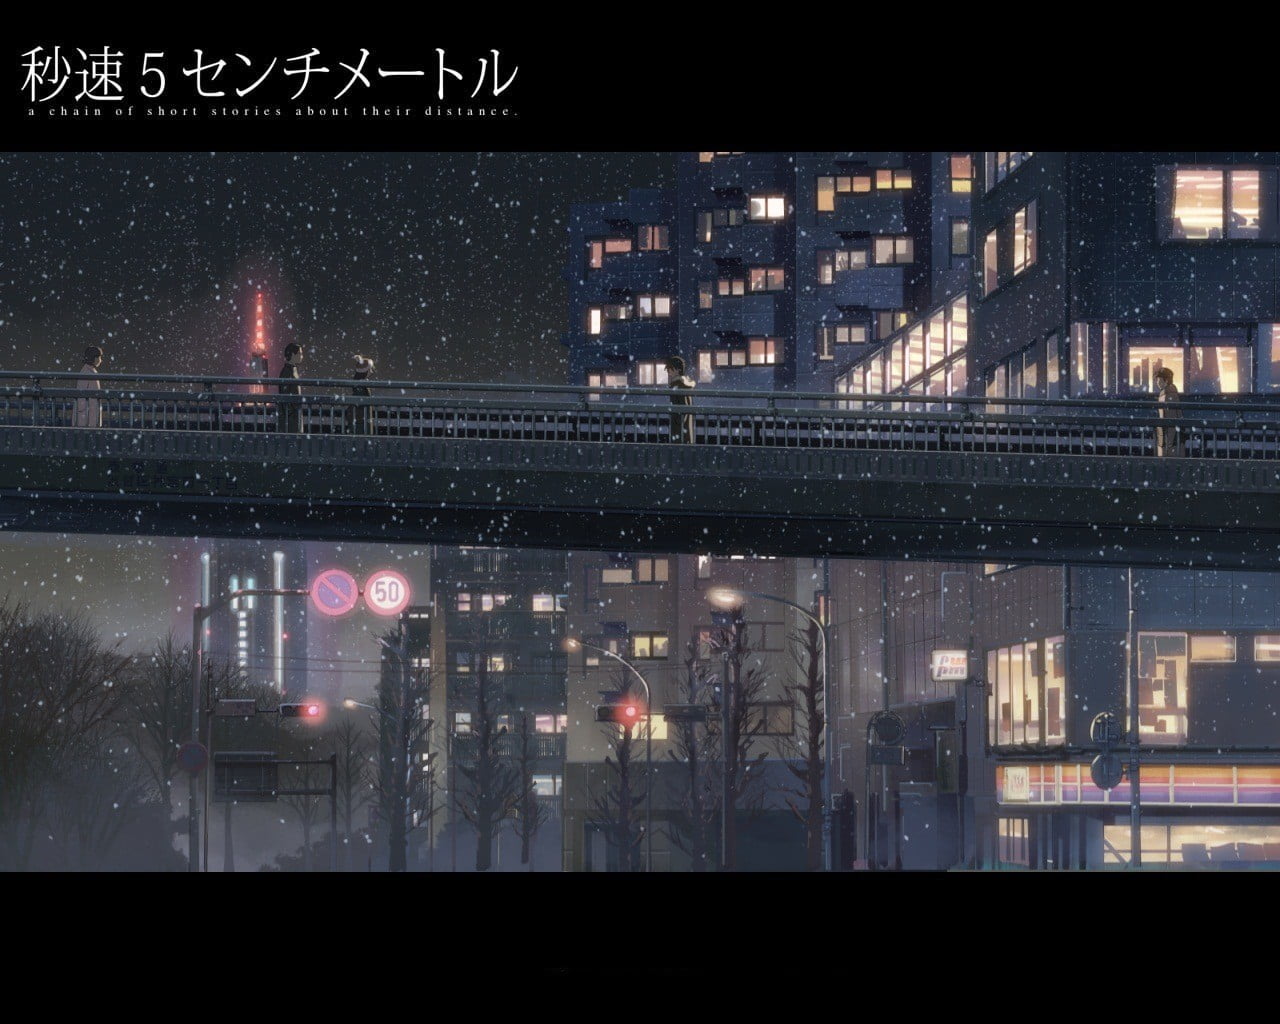 Gray Buildings With Text Overlay Makoto Shinkai 5 Centimeters Per Second Snow City Hd Wallpaper Wallpaper Flare